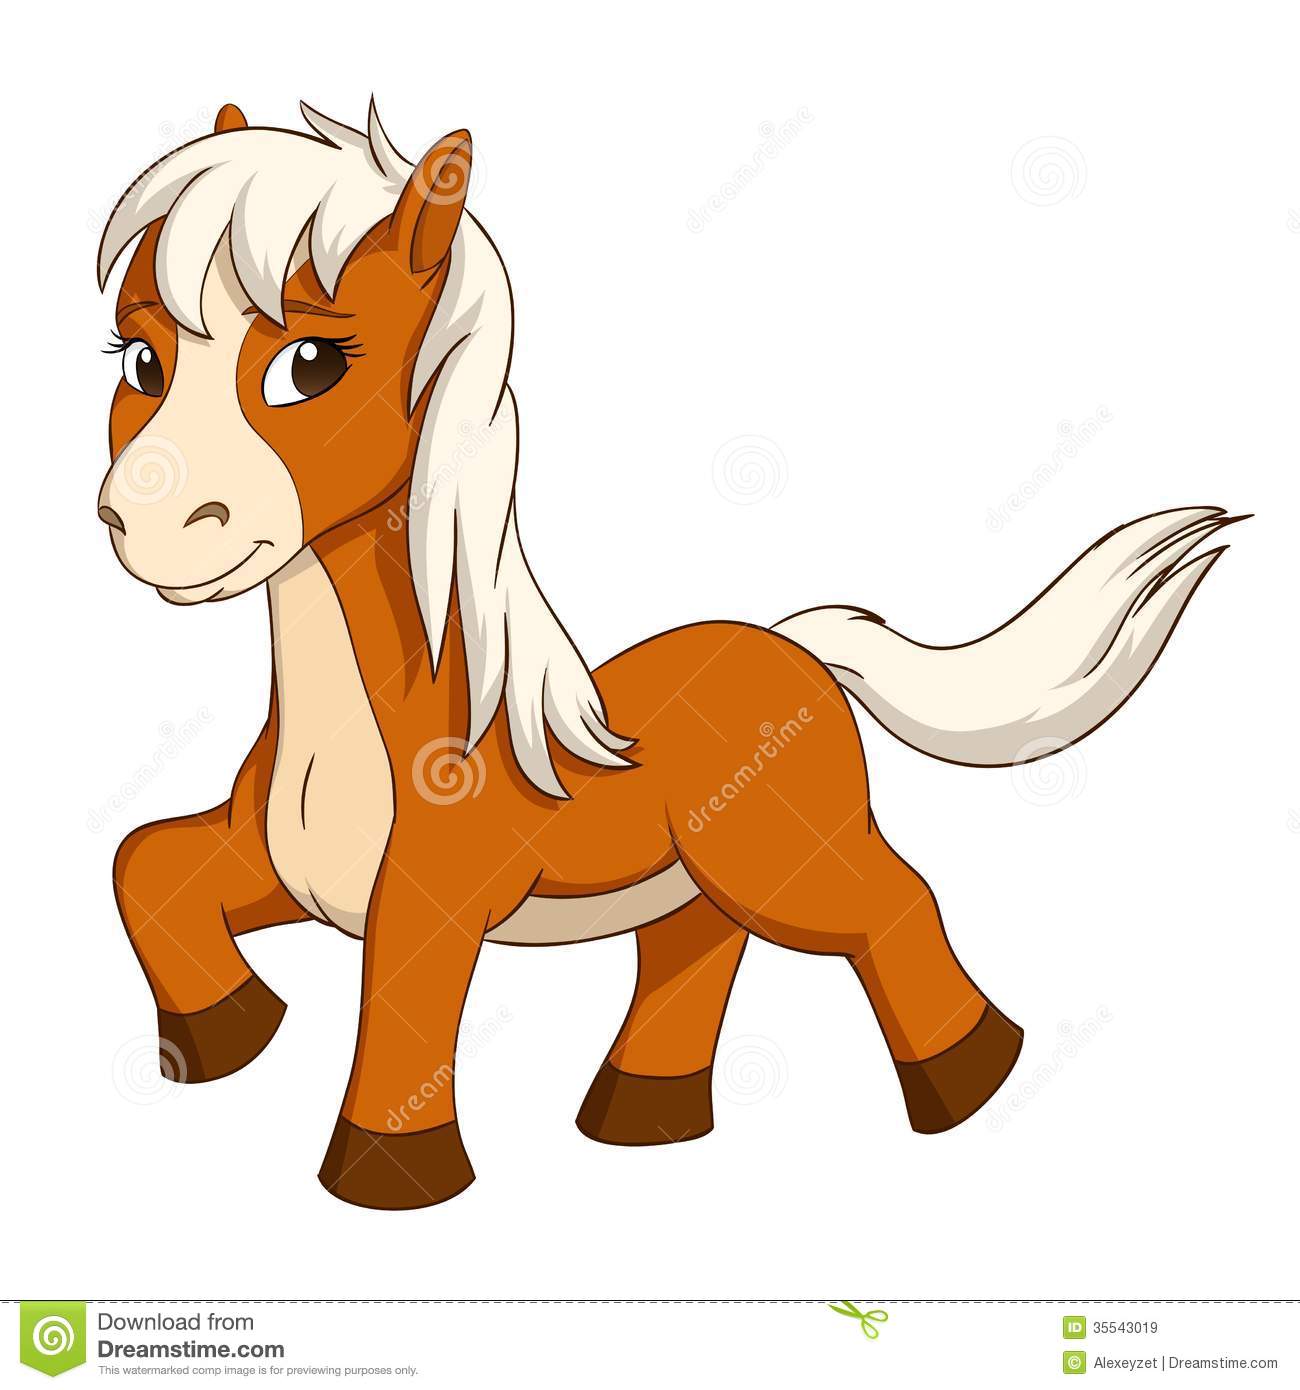 Free Cartoon Horse Cliparts, Download Free Cartoon Horse